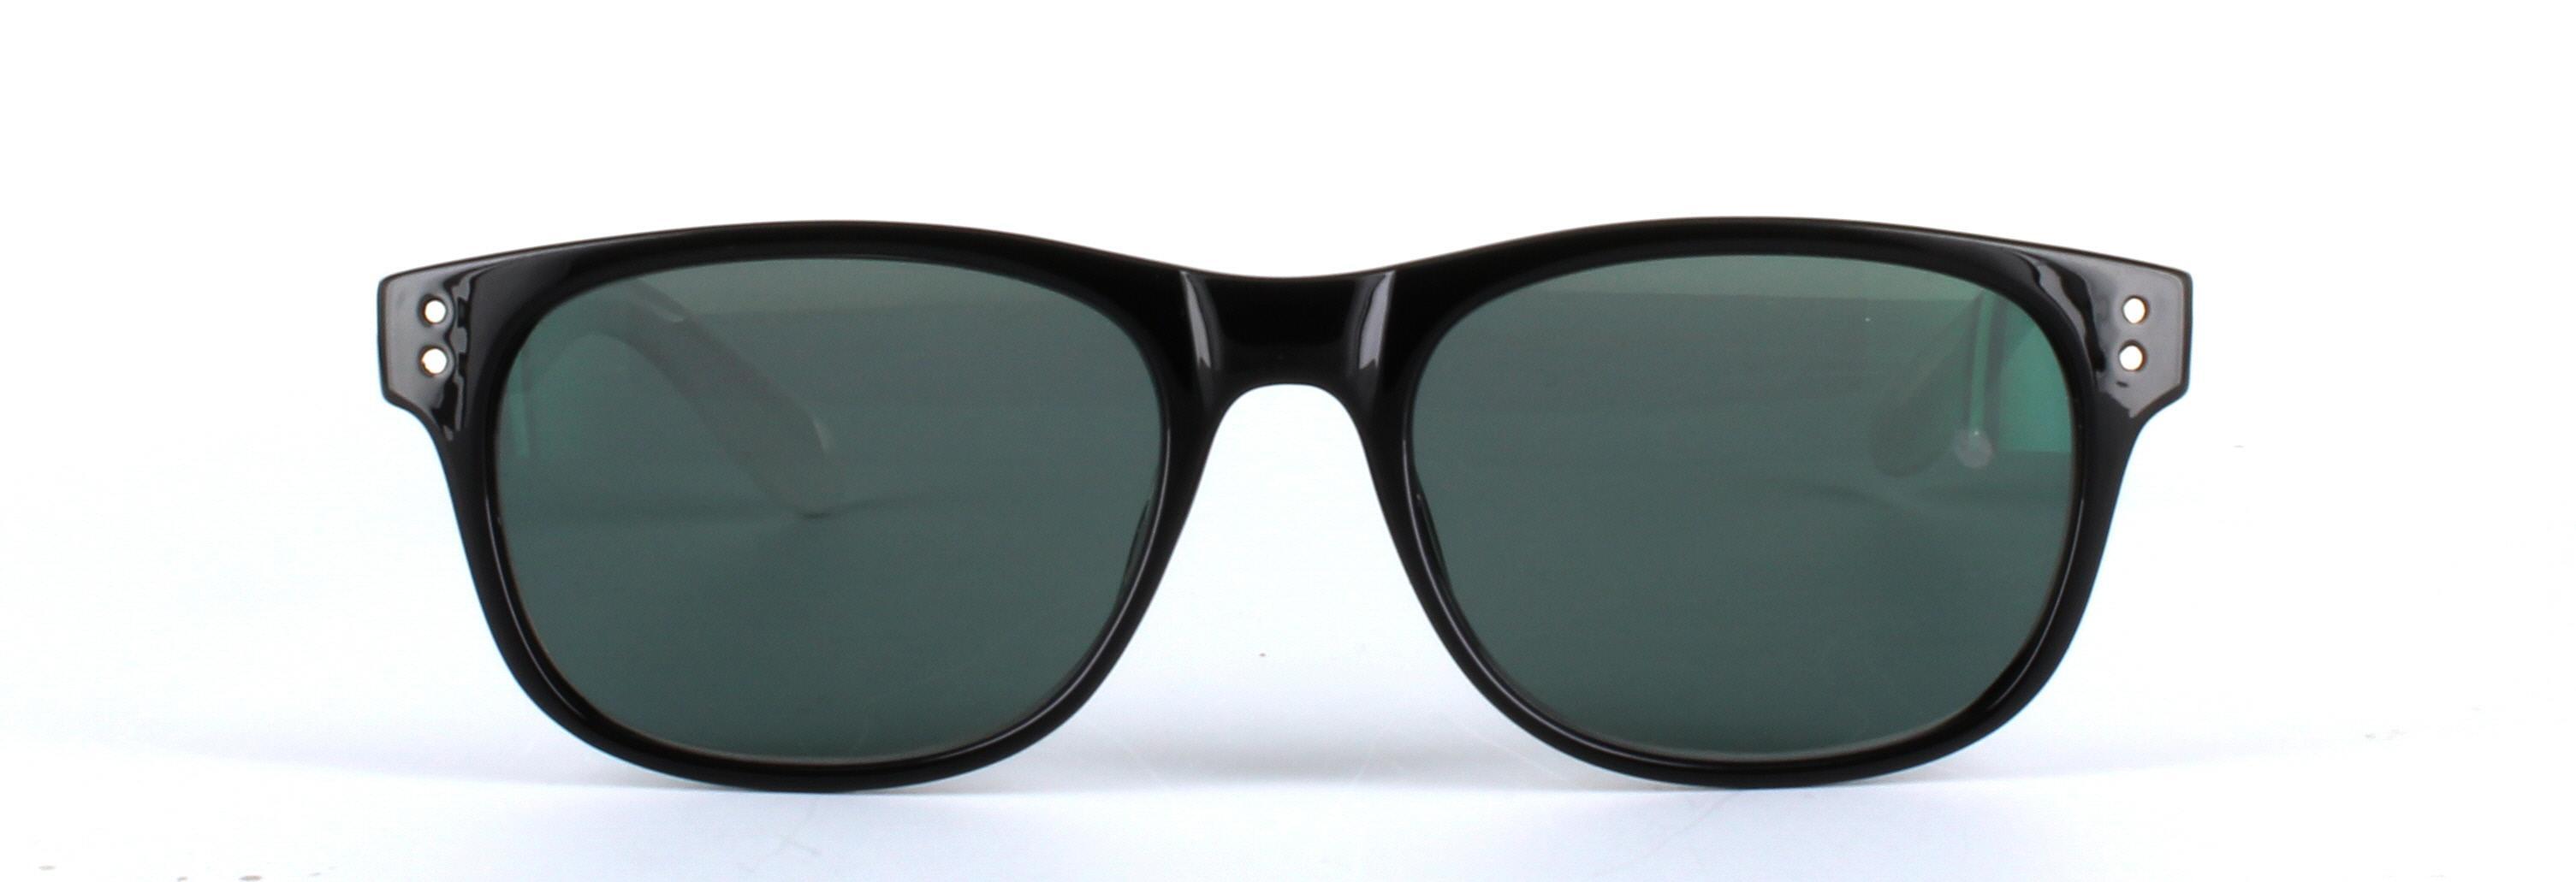 Brazil Black and White Full Rim Oval Plastic Sunglasses - Image View 5